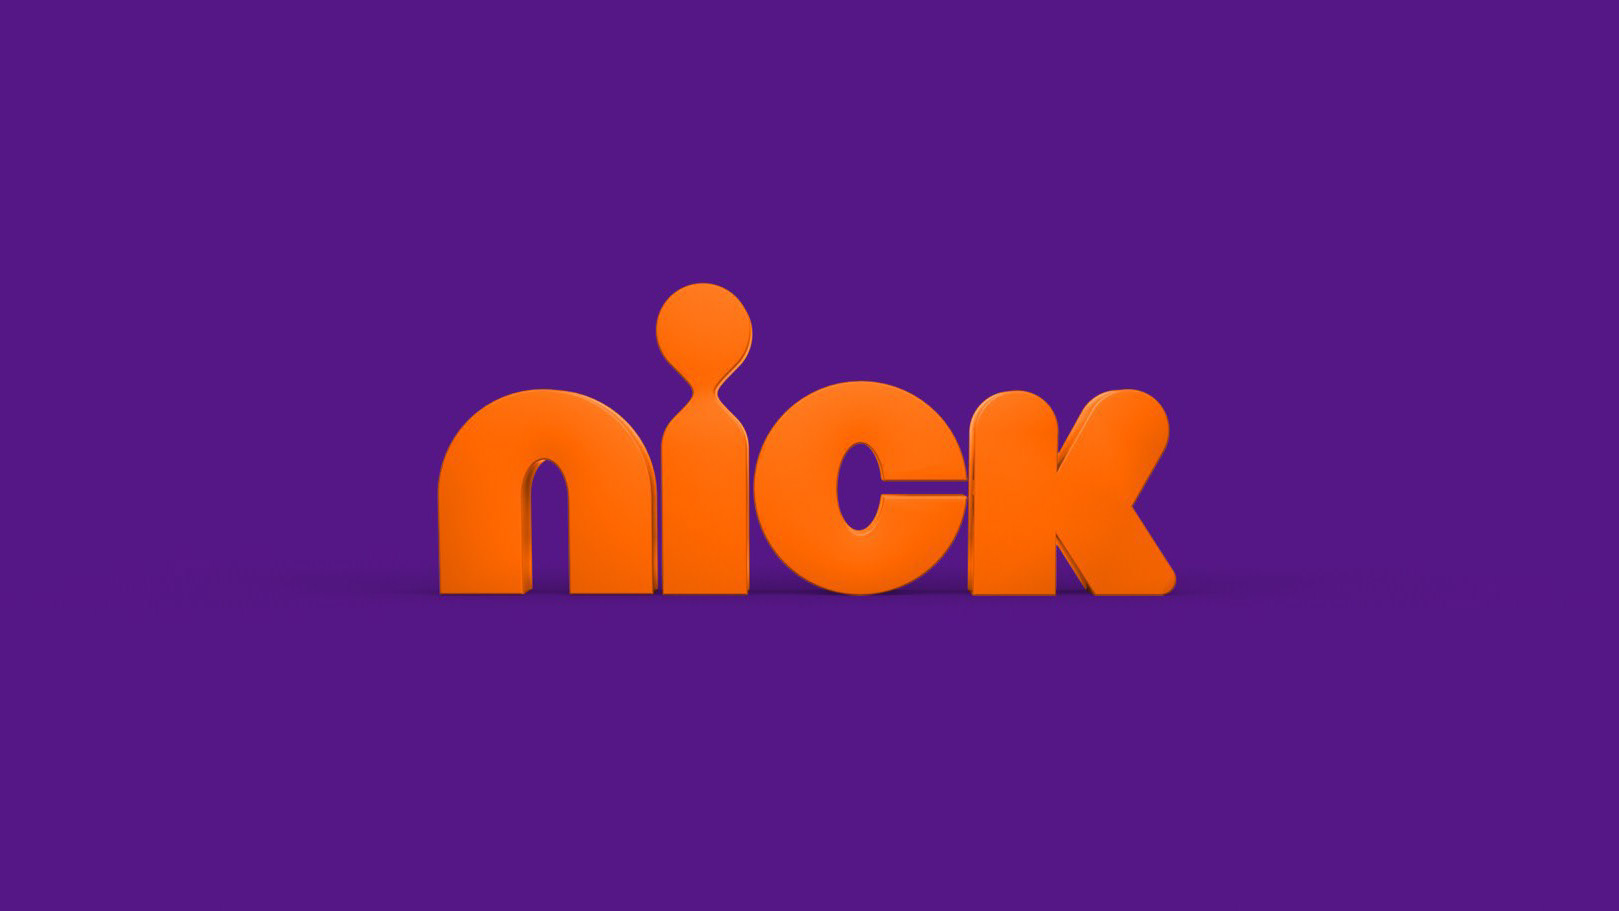 Nick russia. Никелодеон. Канал Nickelodeon. Телеканал Никелодеон. Никелодеон логотип.